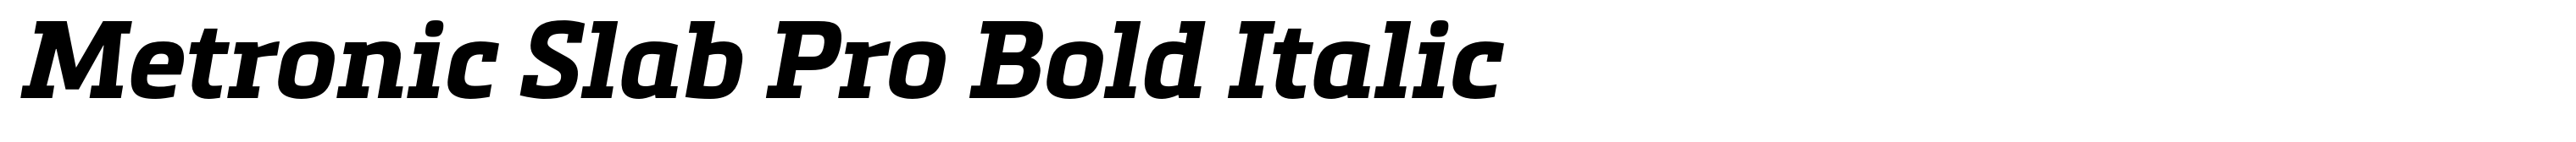 Metronic Slab Pro Bold Italic